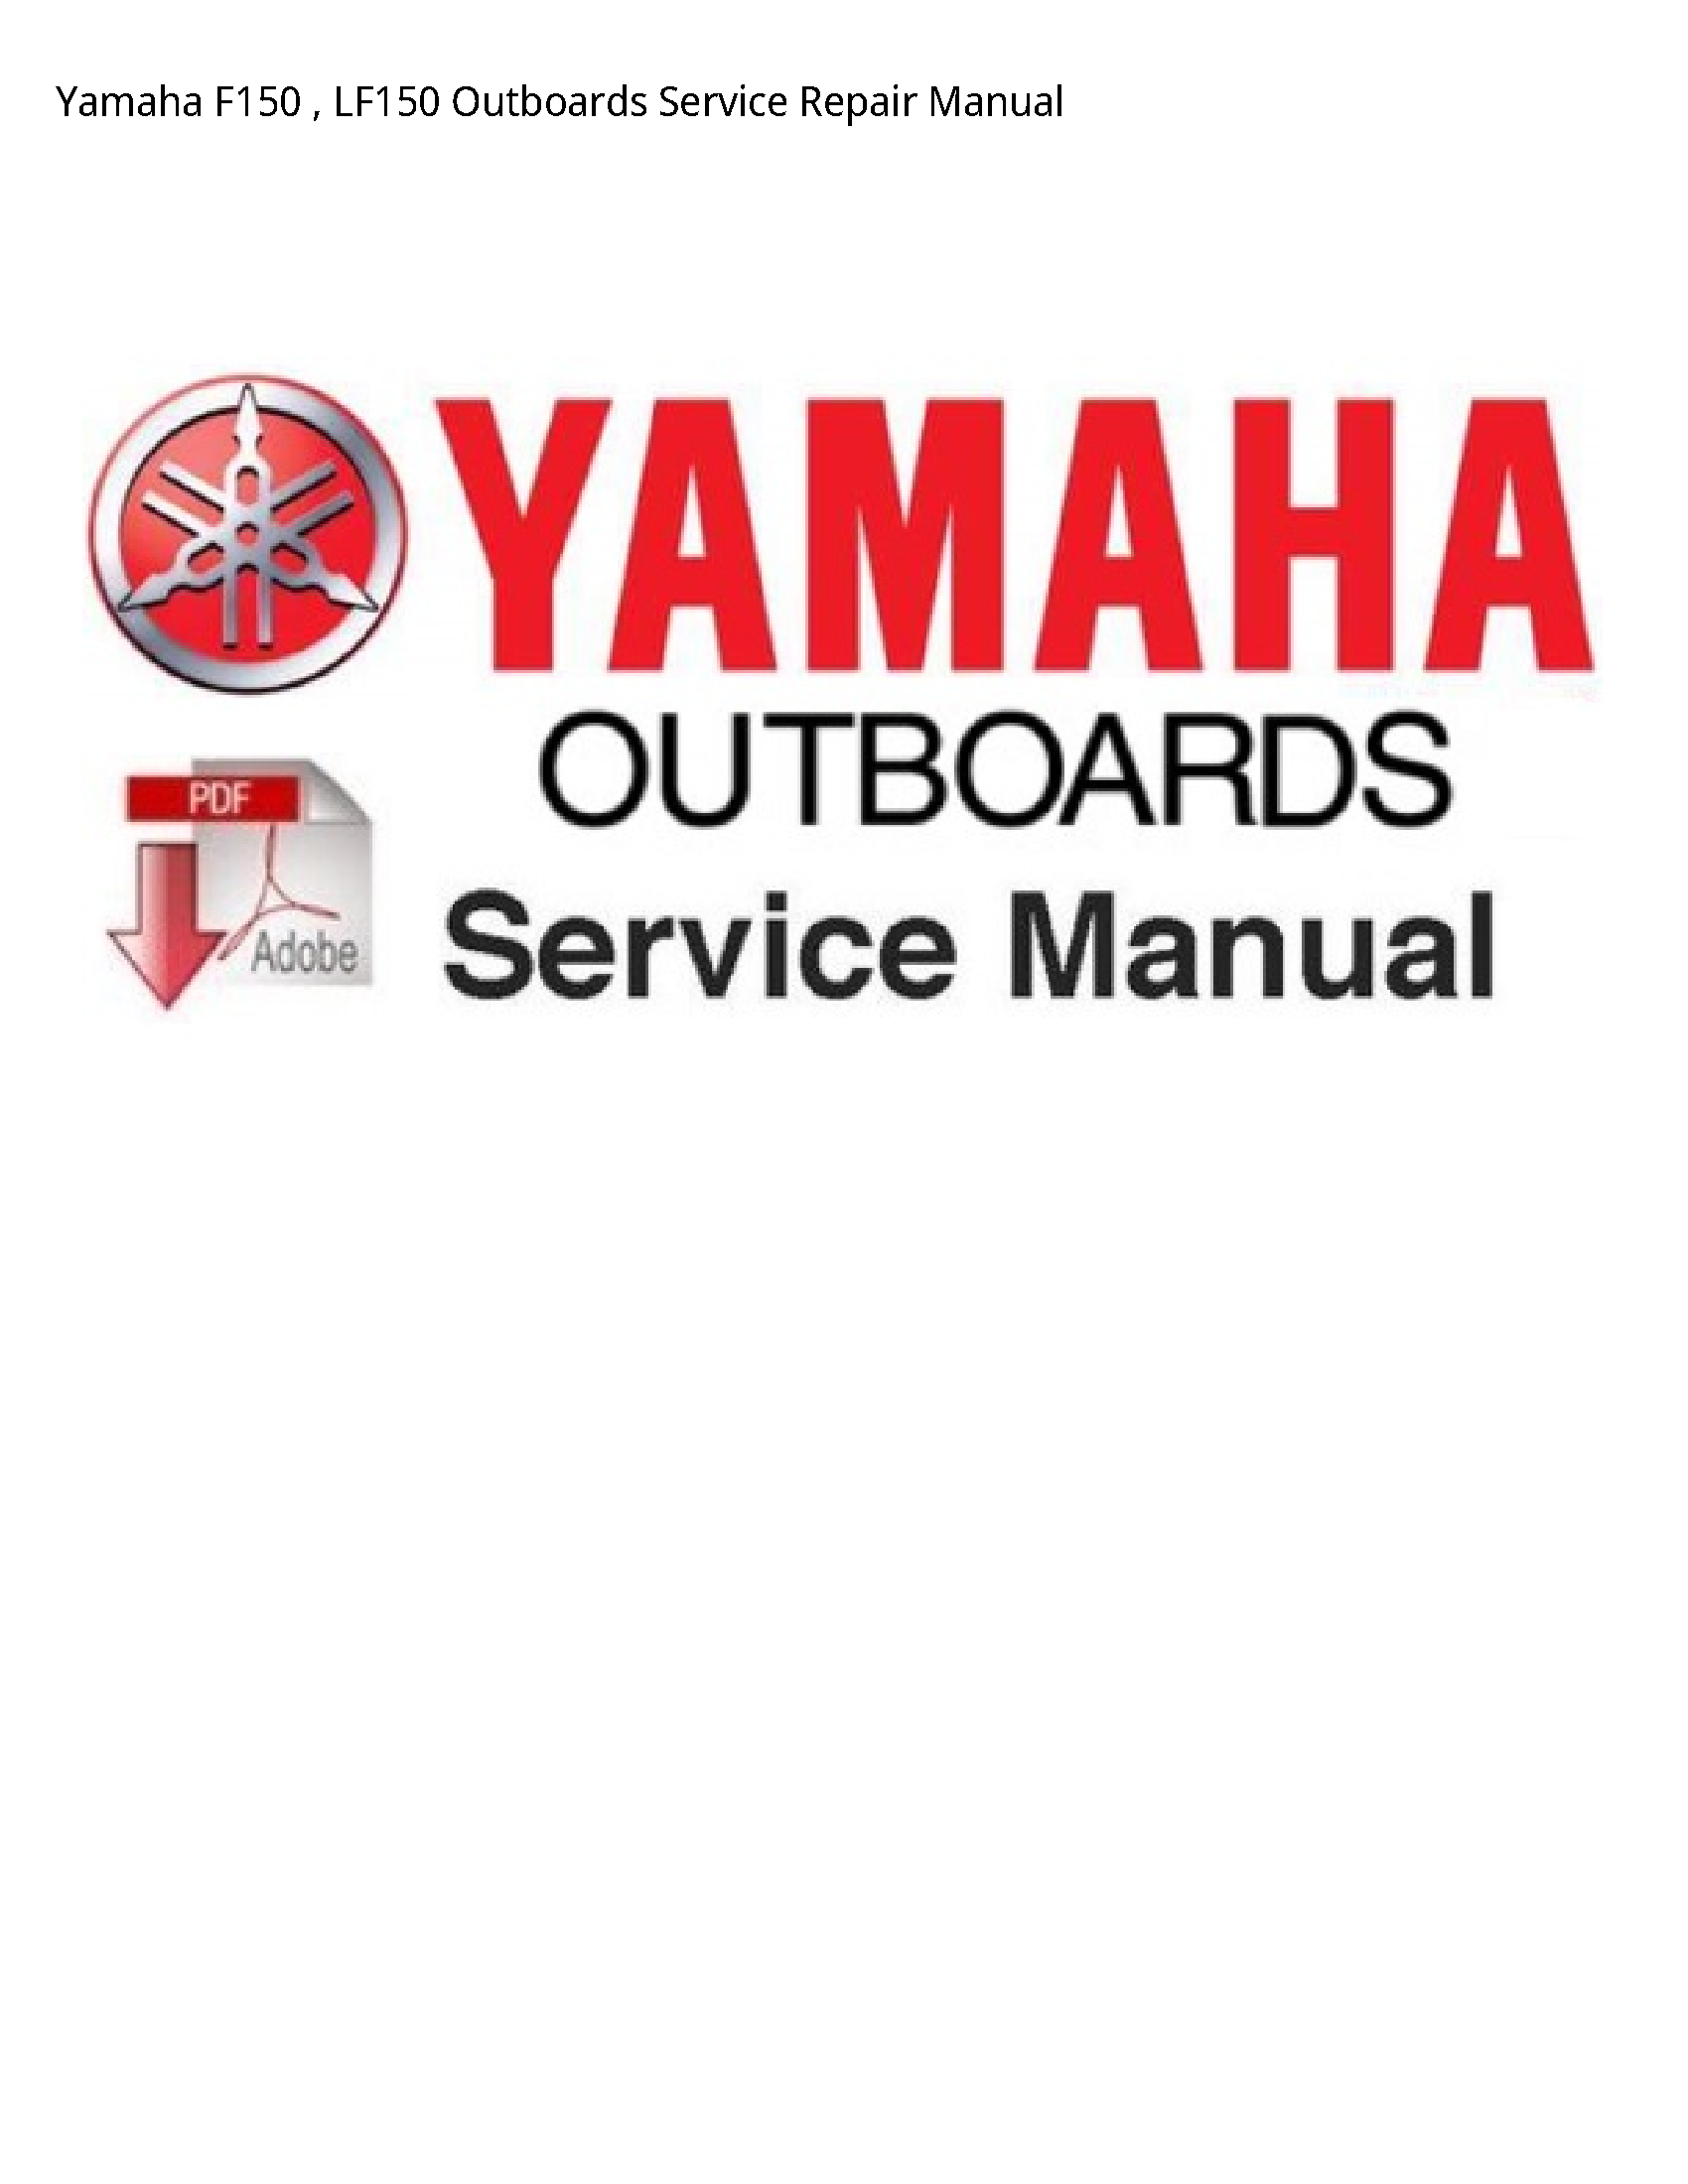 Yamaha F150 Outboards manual